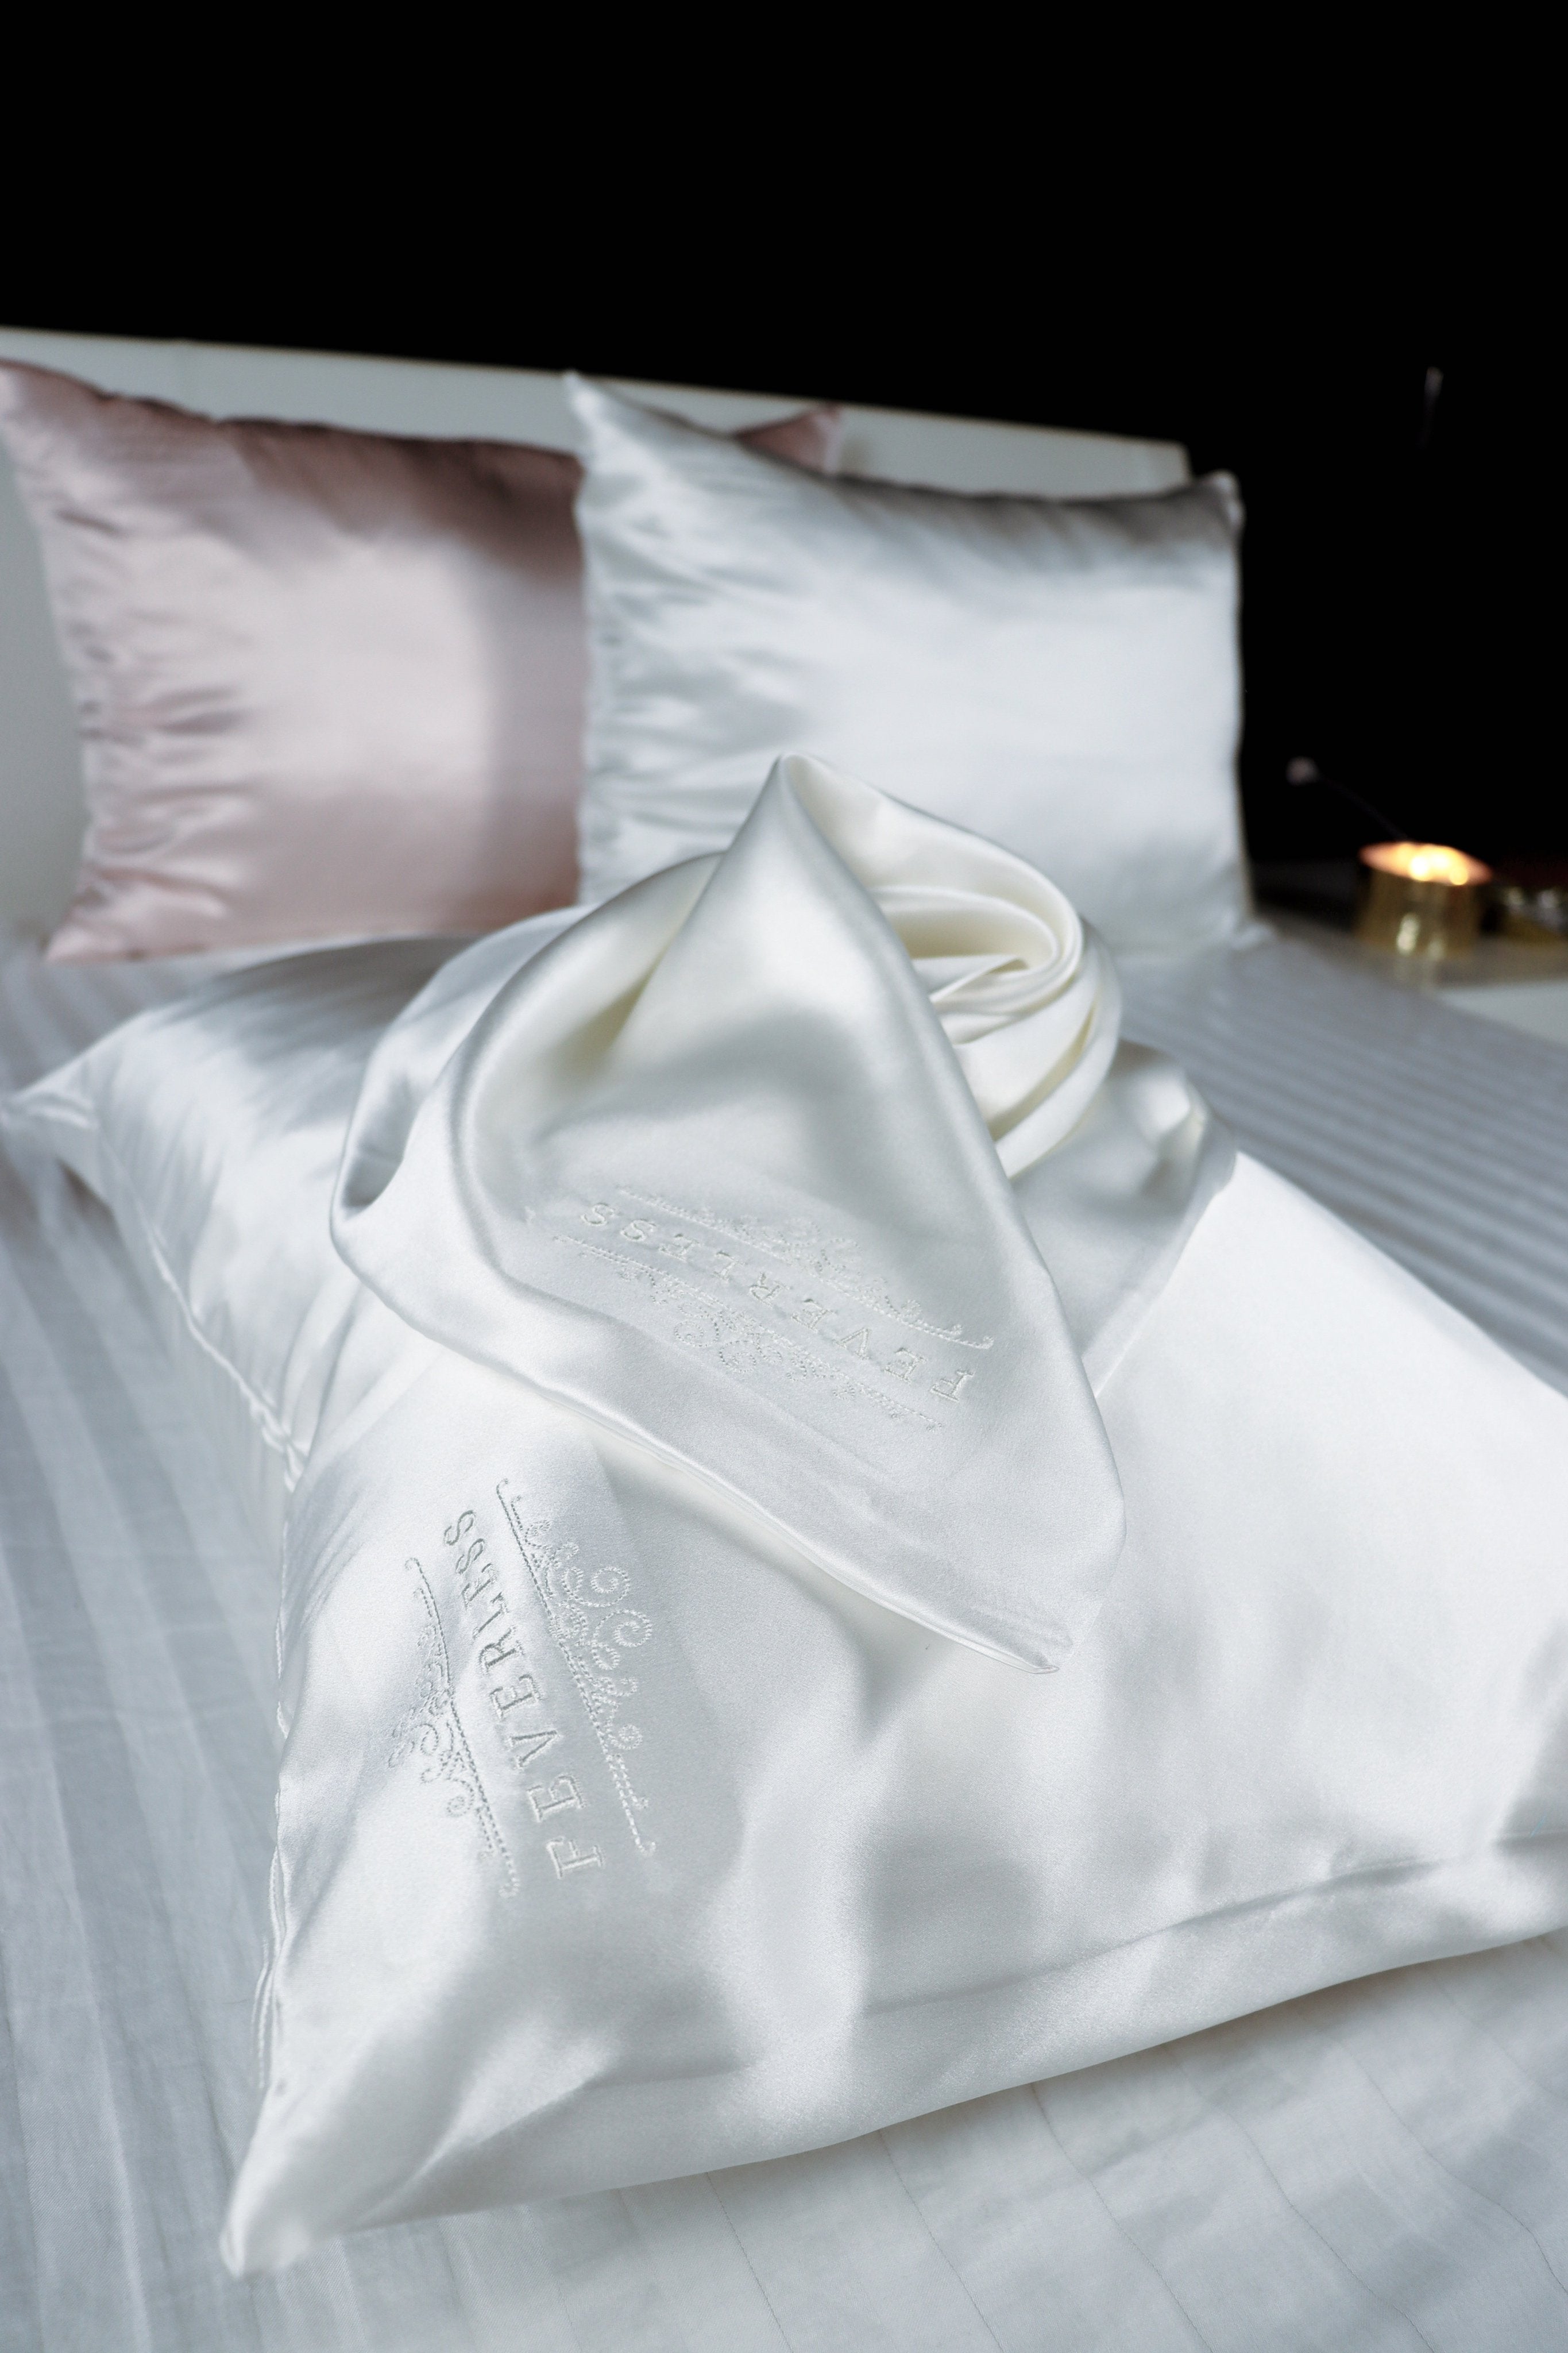 Glowing Hair & Skin SET - STANDARD Size Curling Kit + 1 FeverLess Pillowcase in Natural Silk